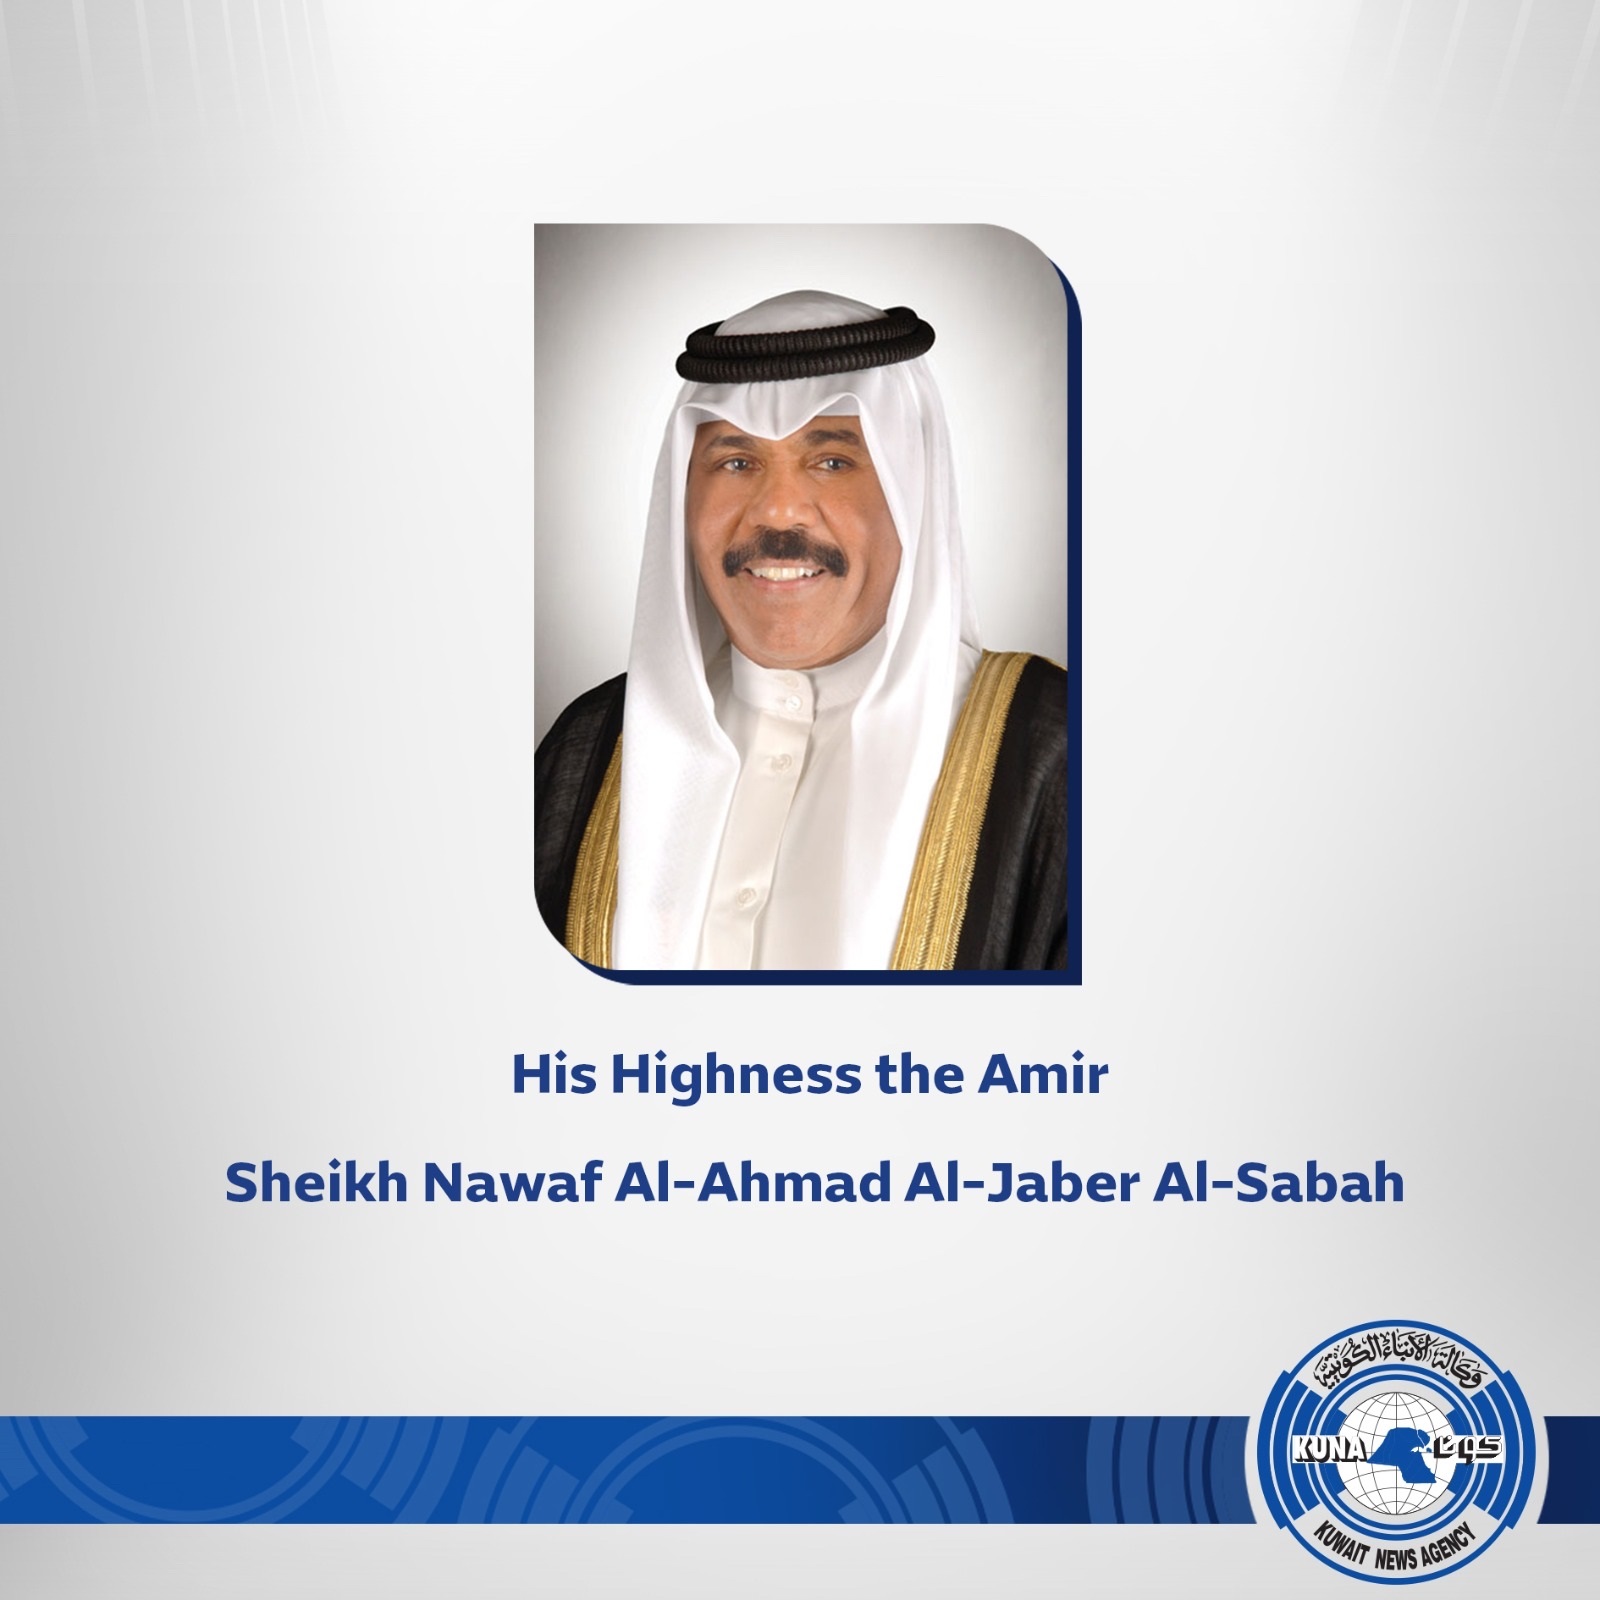 Kuwait Amir congratulates Jordan King on coronation anniv.                                                                                                                                                                                                